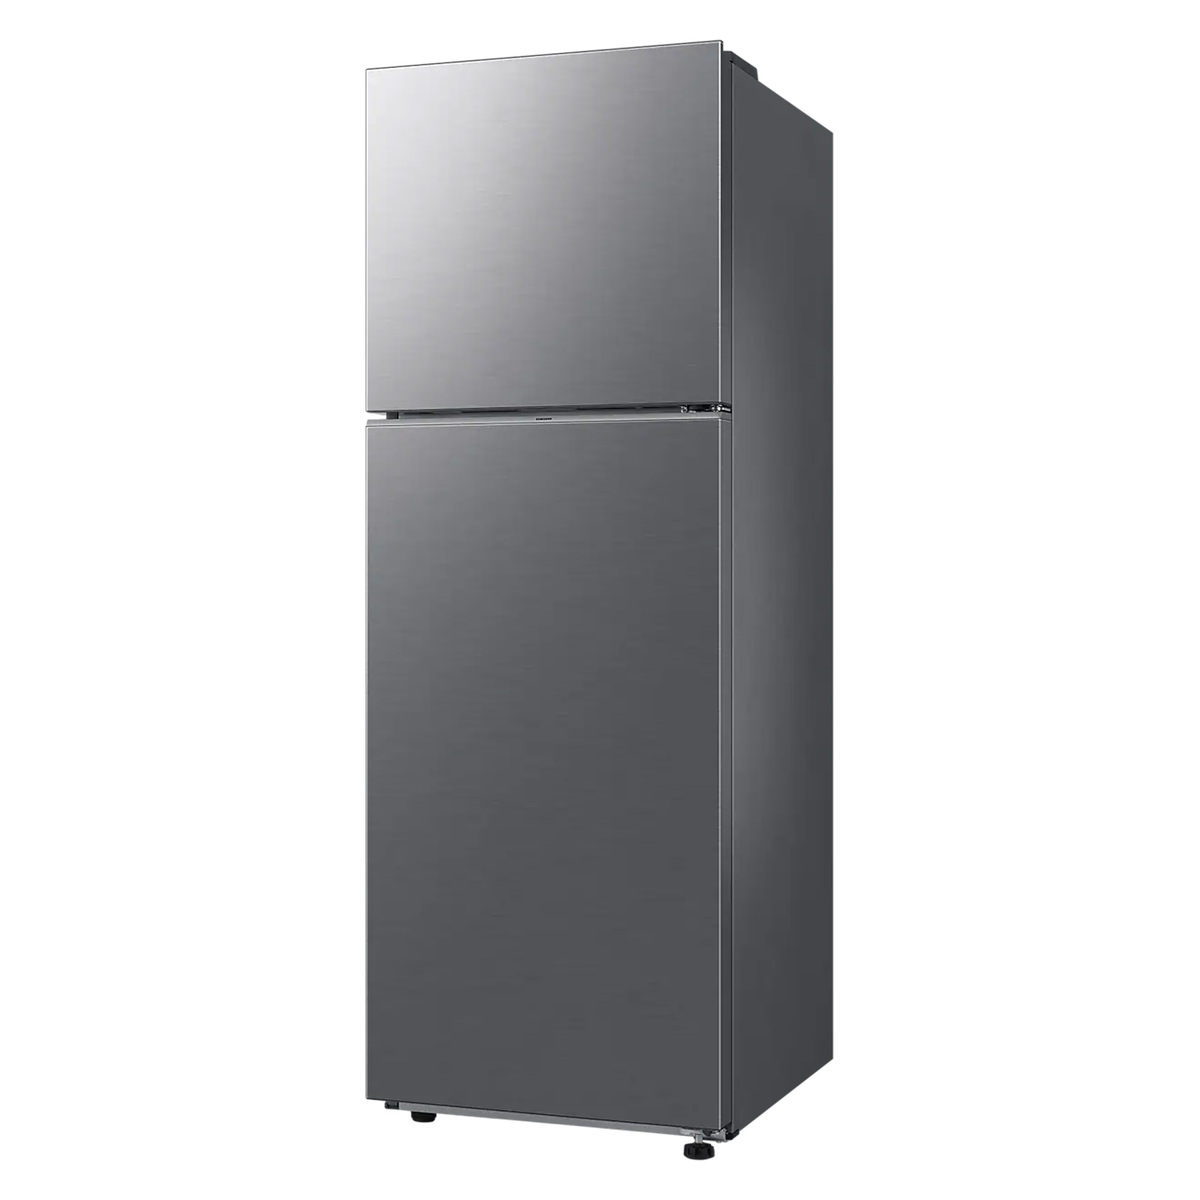 Samsung Double Door Refrigerator, 450 L, Silver, RT45CG5400S9